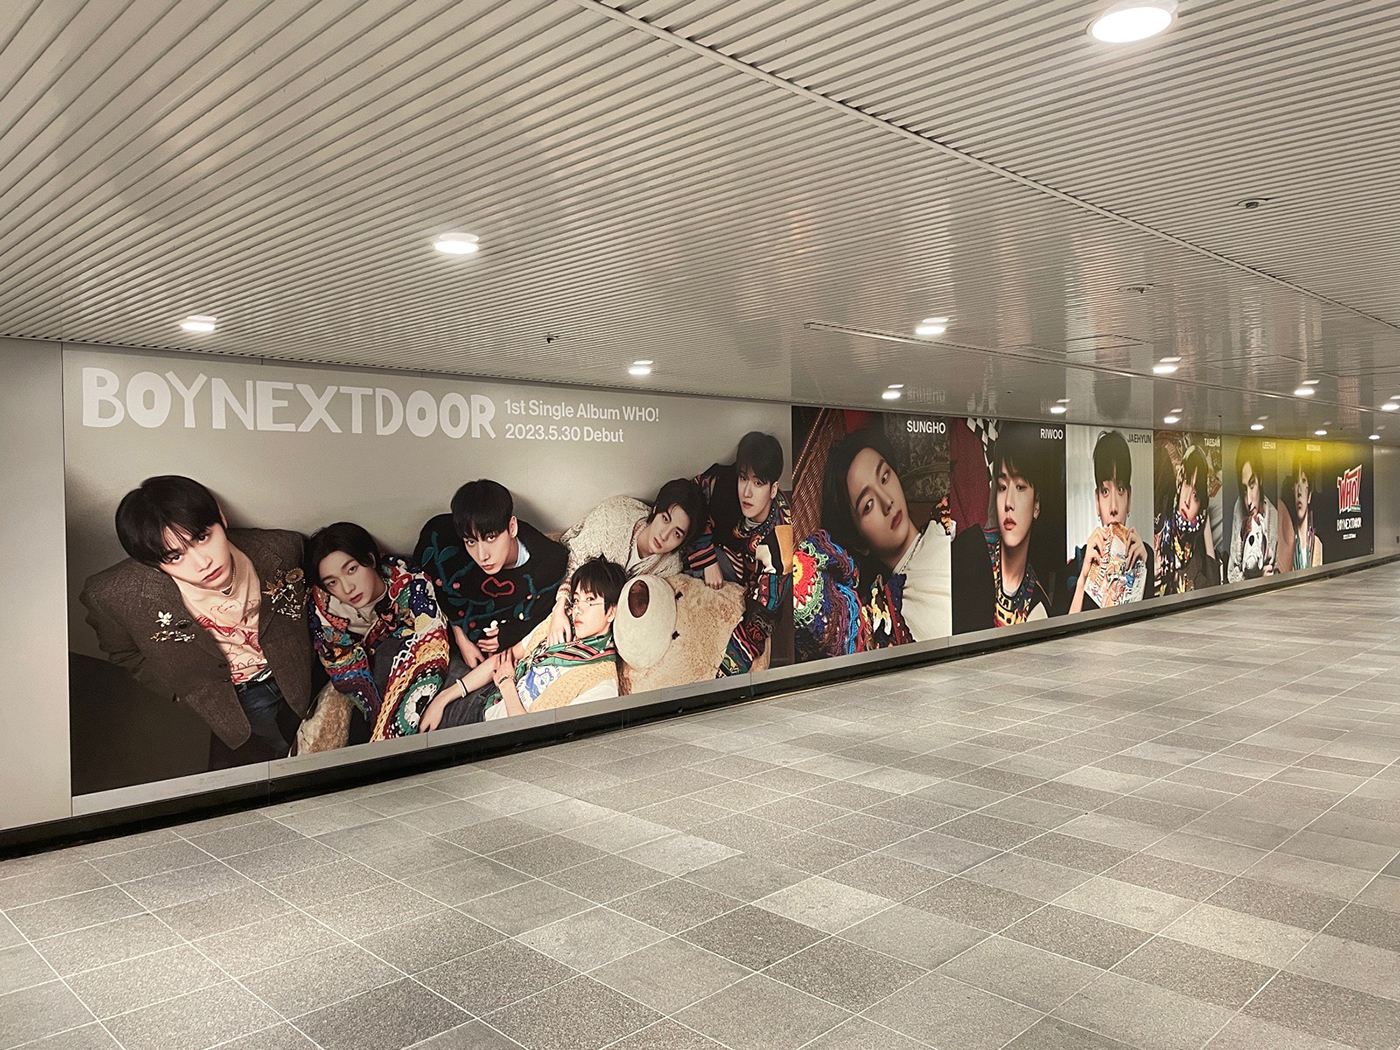 BOYNEXTDOOR、1stシングル「WHO!」の発売を記念して渋谷に巨大広告が出現！ シングル収録曲「But I Like You」のMVも公開